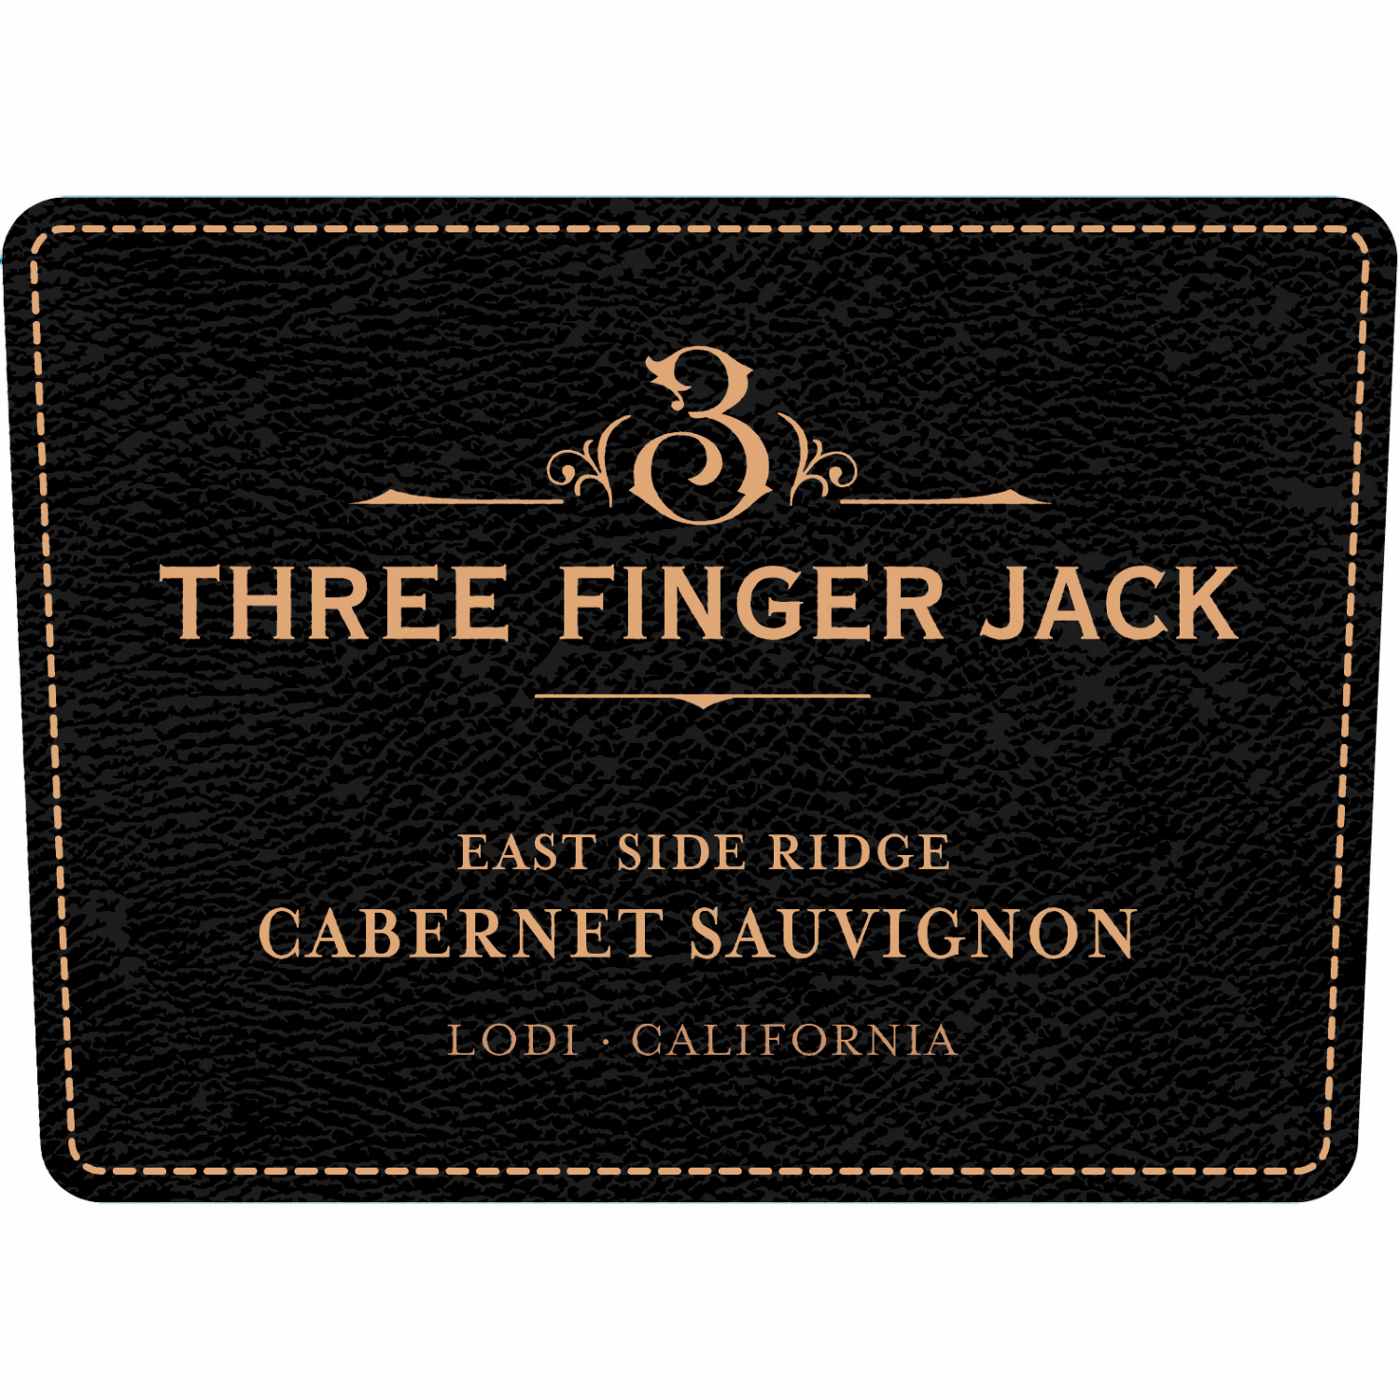 Three Finger Jack East Side Ridge Cabernet Sauvignon; image 2 of 2